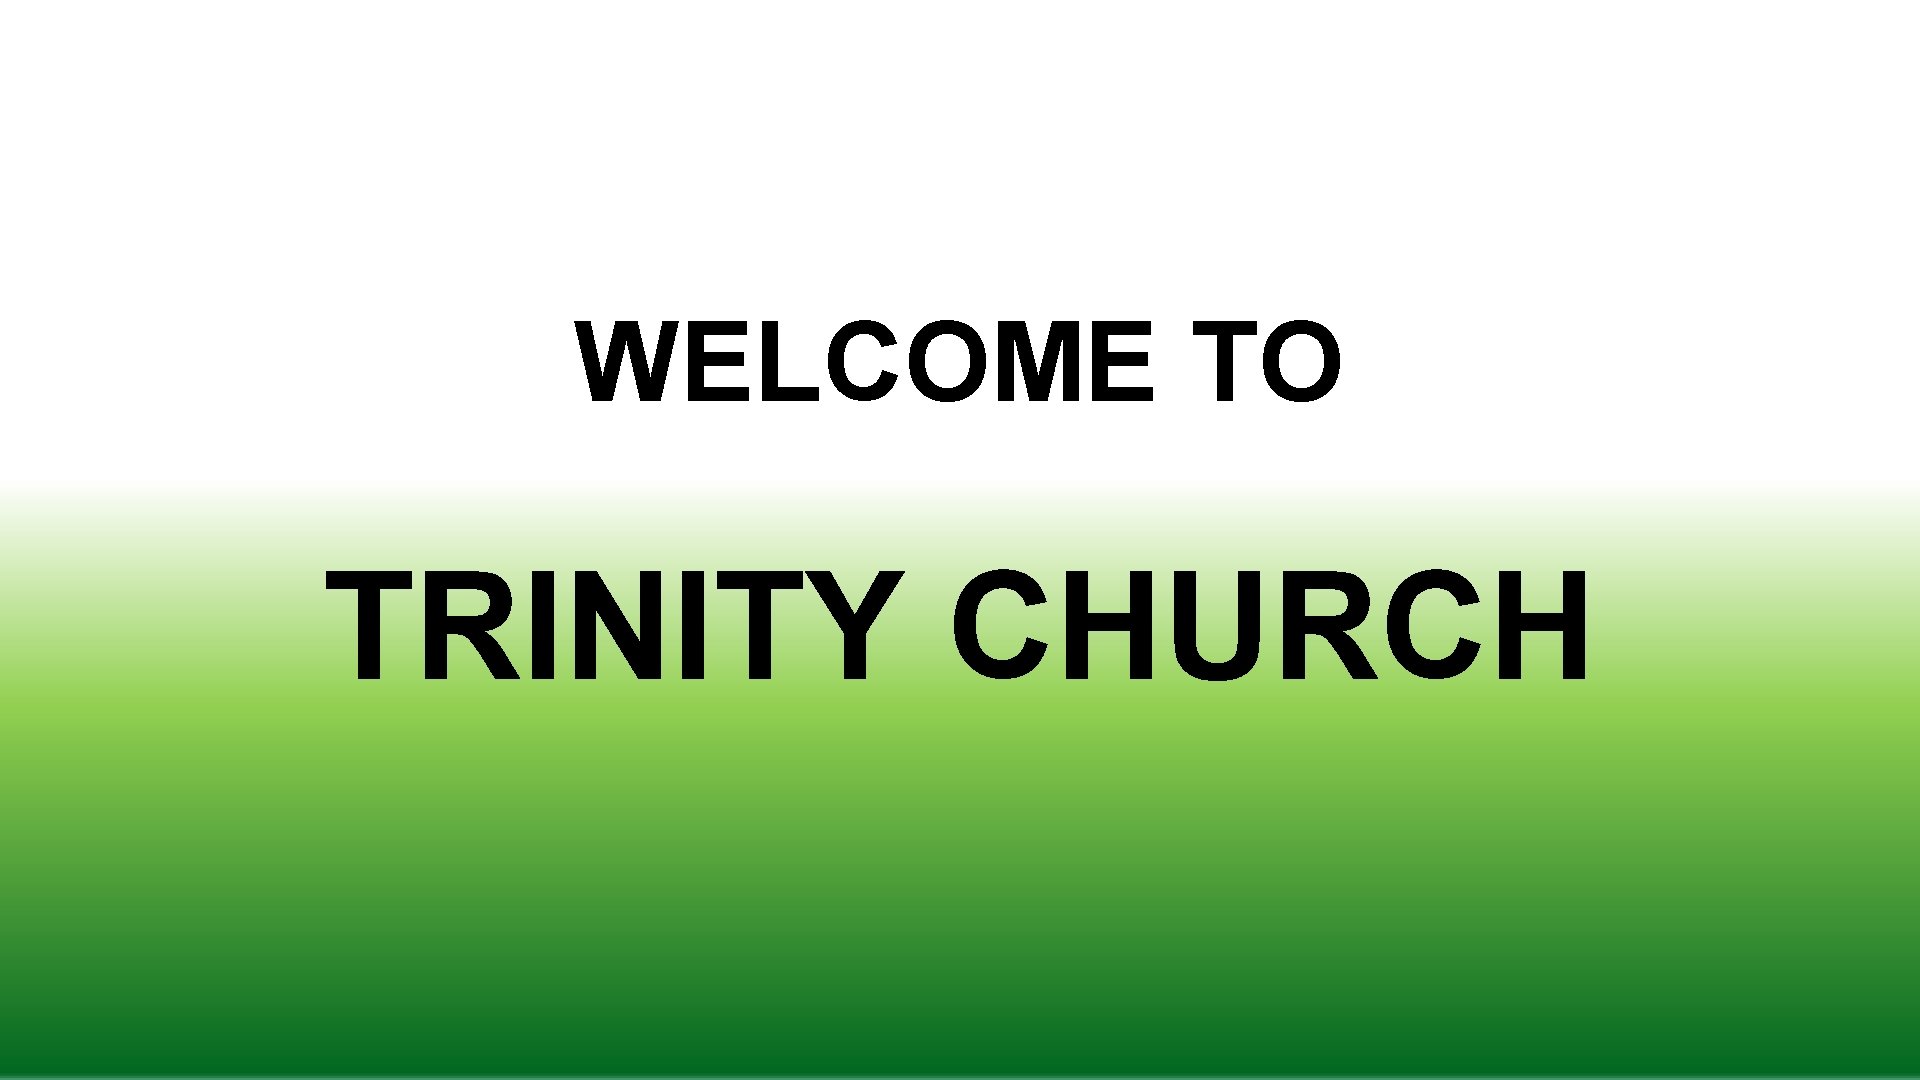 WELCOME TO TRINITY CHURCH 